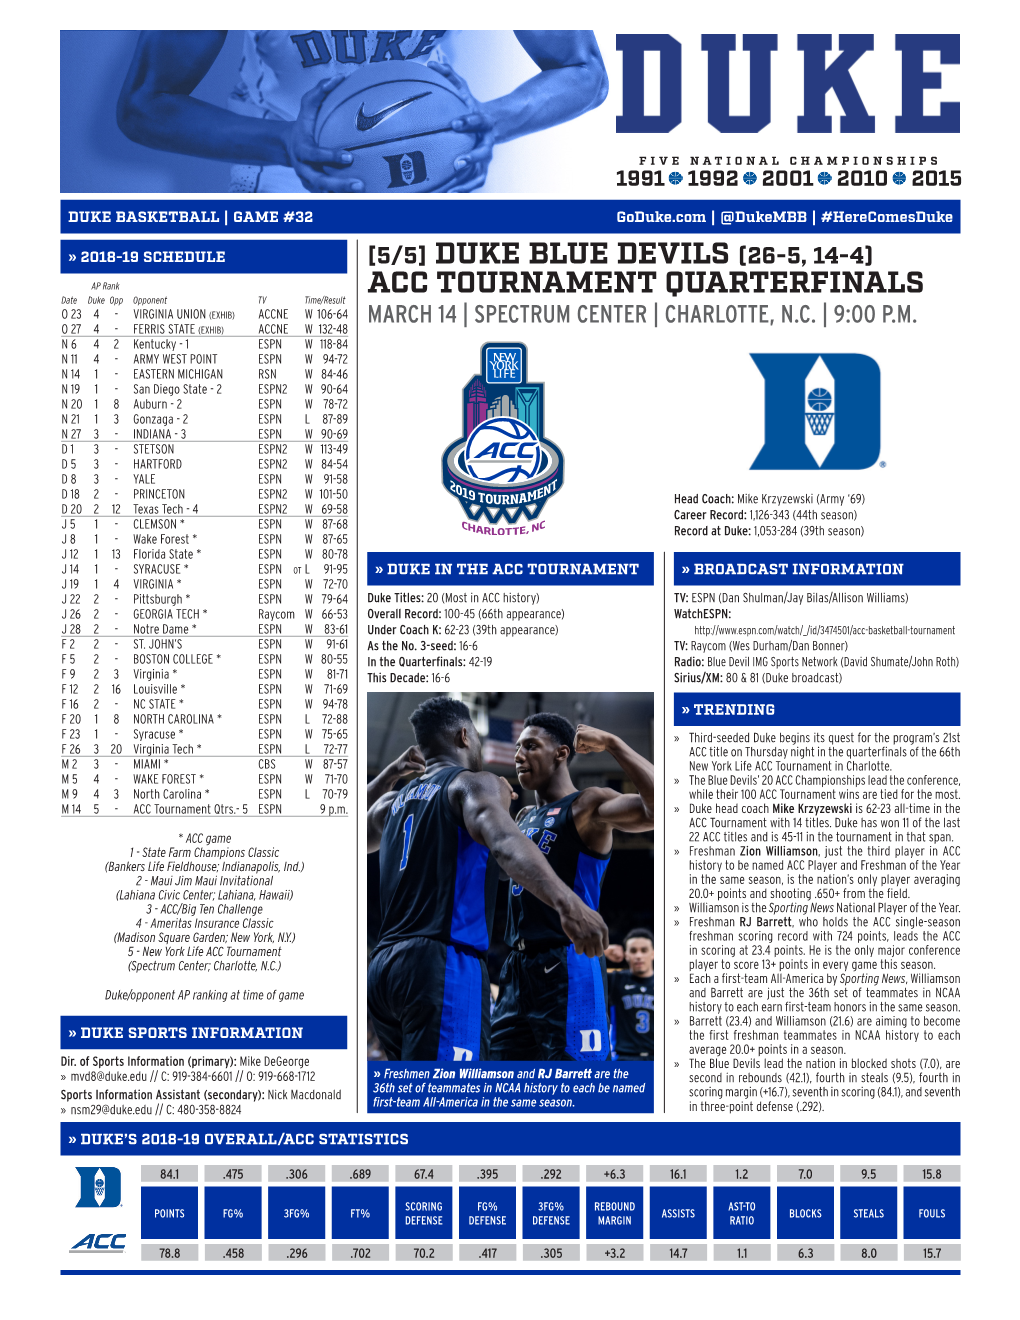 [5/5] Duke Blue Devils (26-5, 14-4) Acc Tournament Quarterfinals